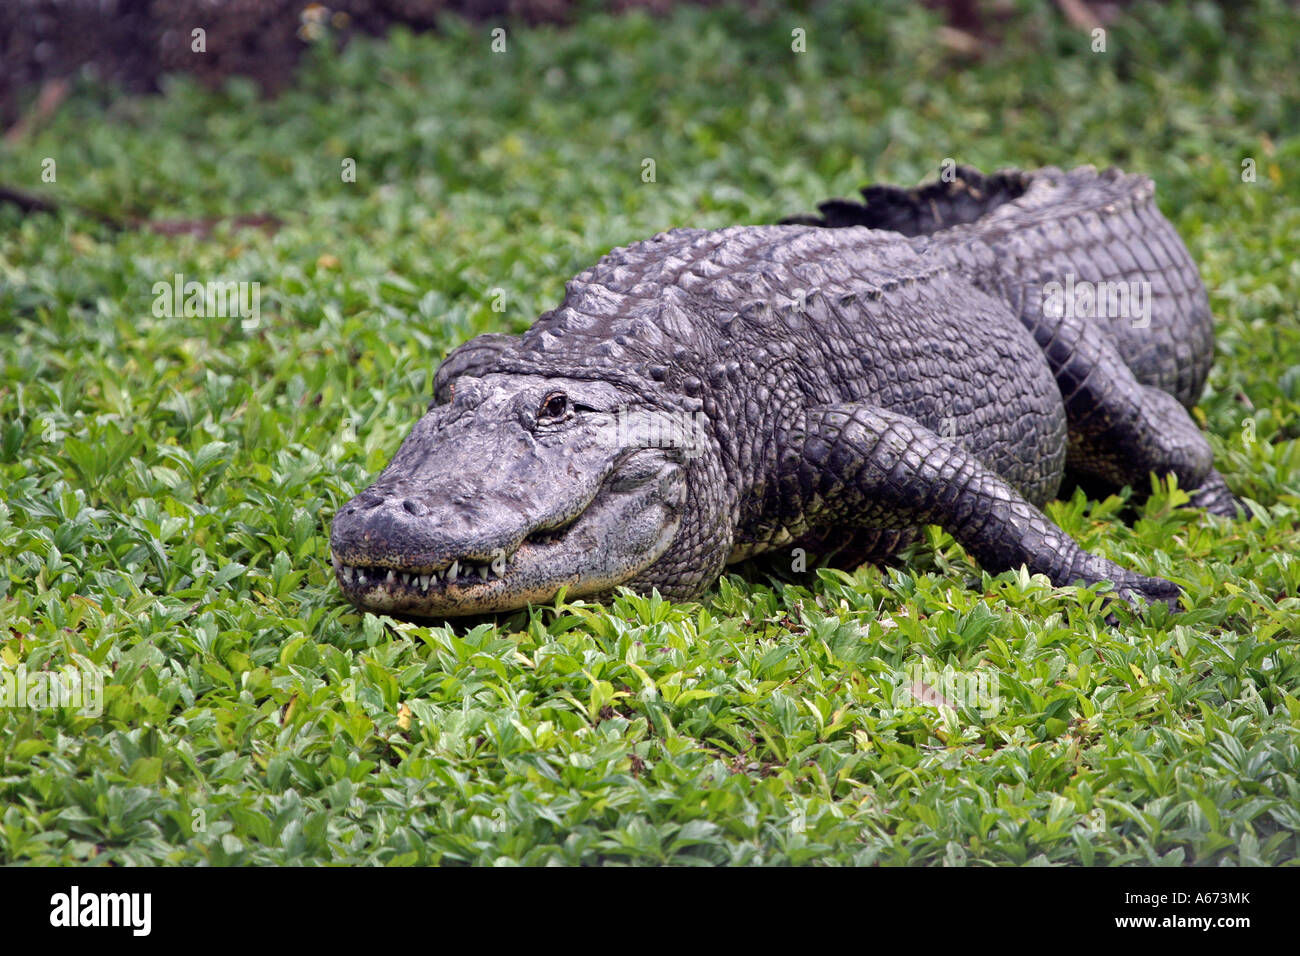 American Alligator crawling in foliage Stock Photo